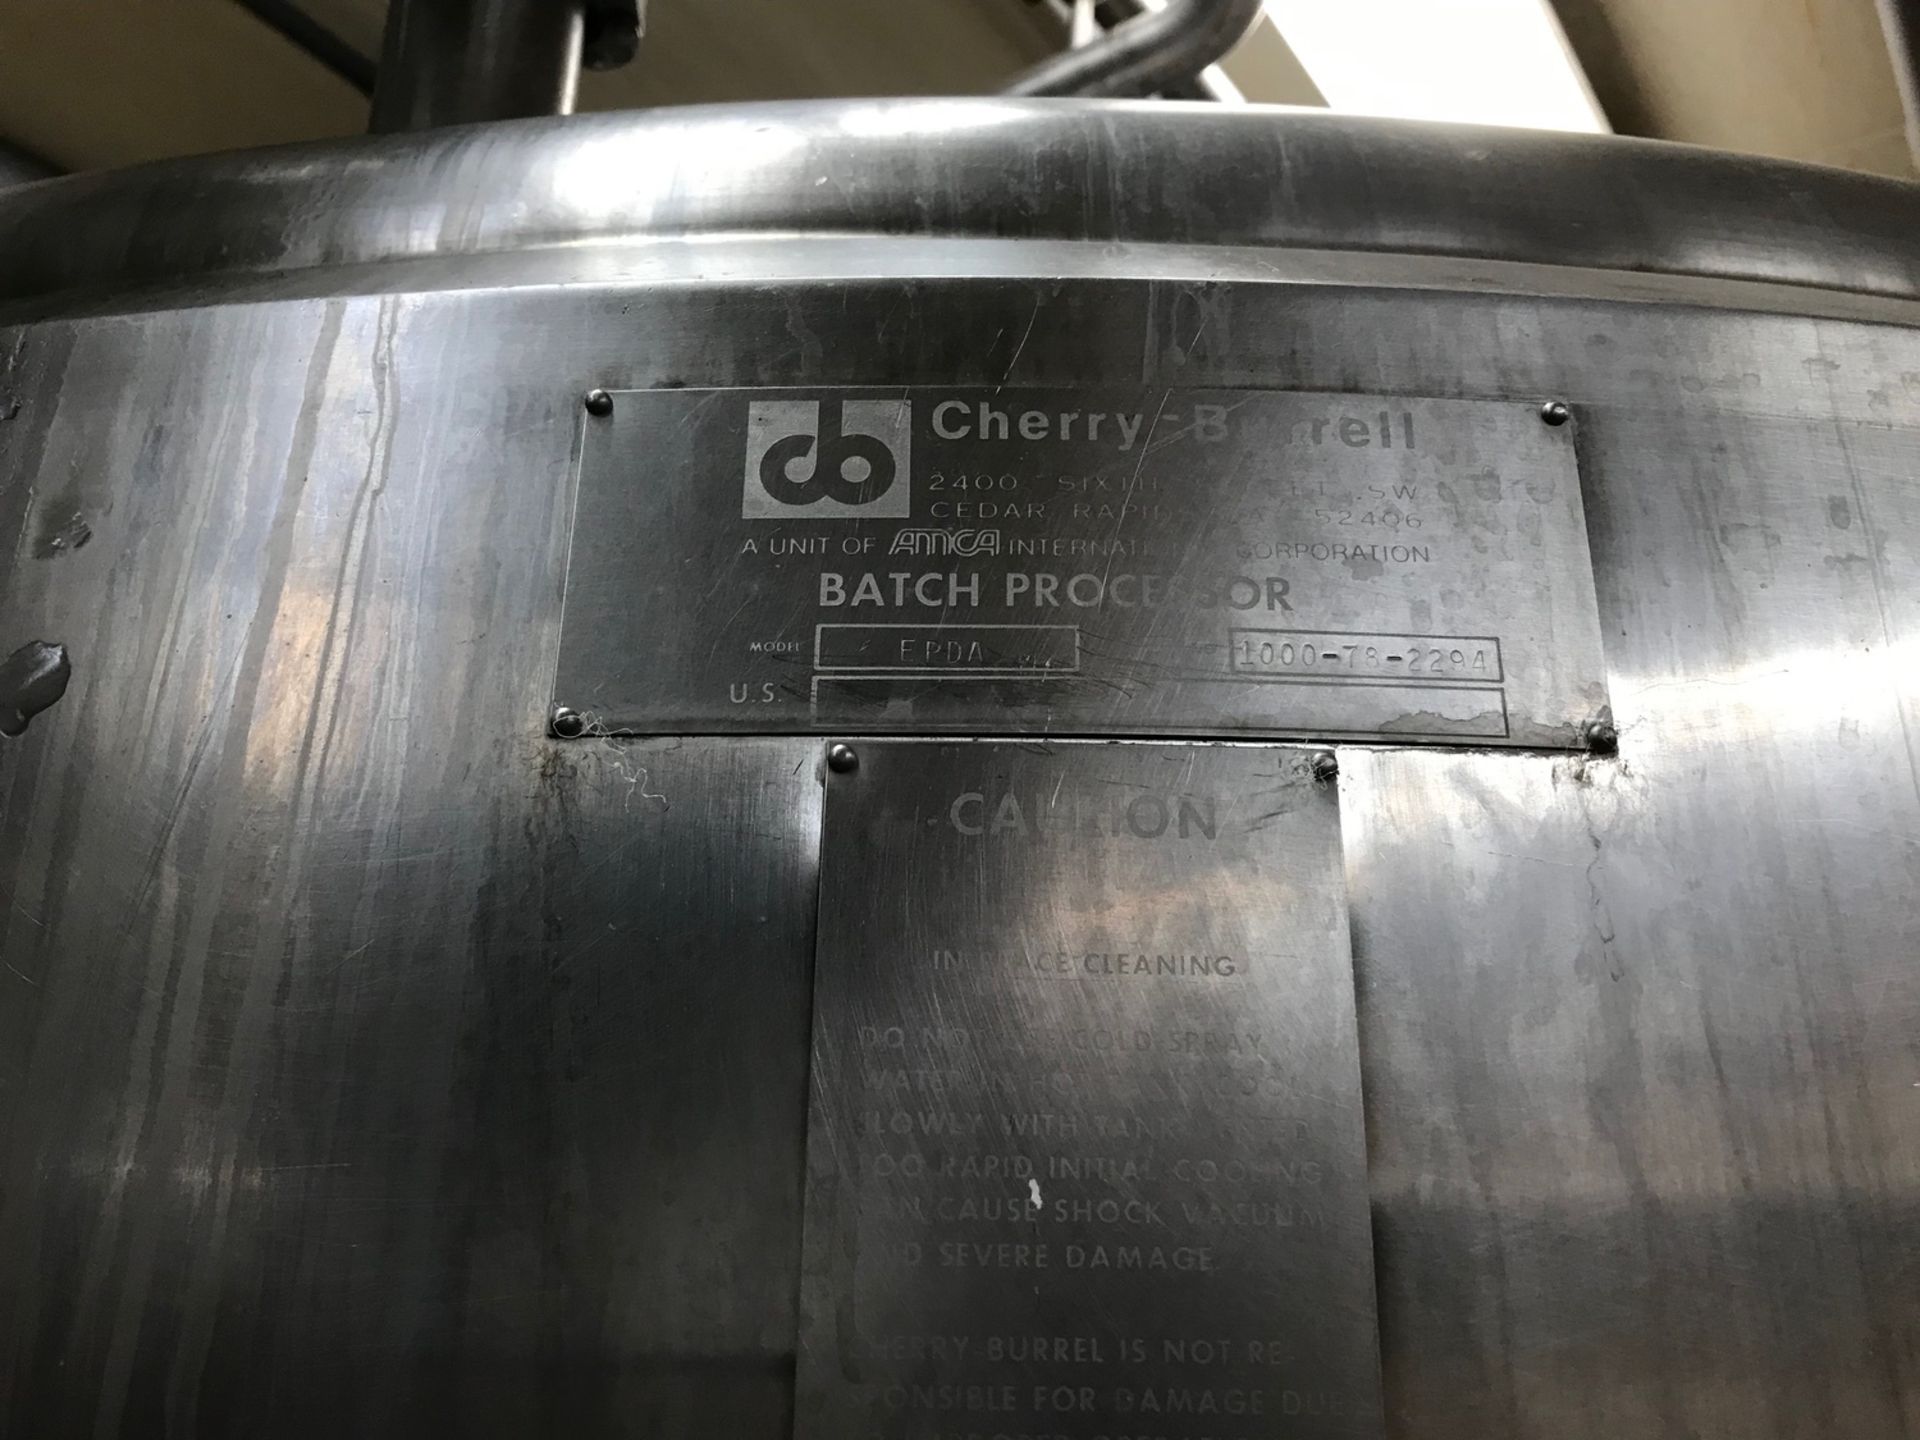 Cherry Burrell 1000 Gallon Batch Processor, Model EPDA, Vertical Agitation, S/N 1000-78-2294 - Image 2 of 5